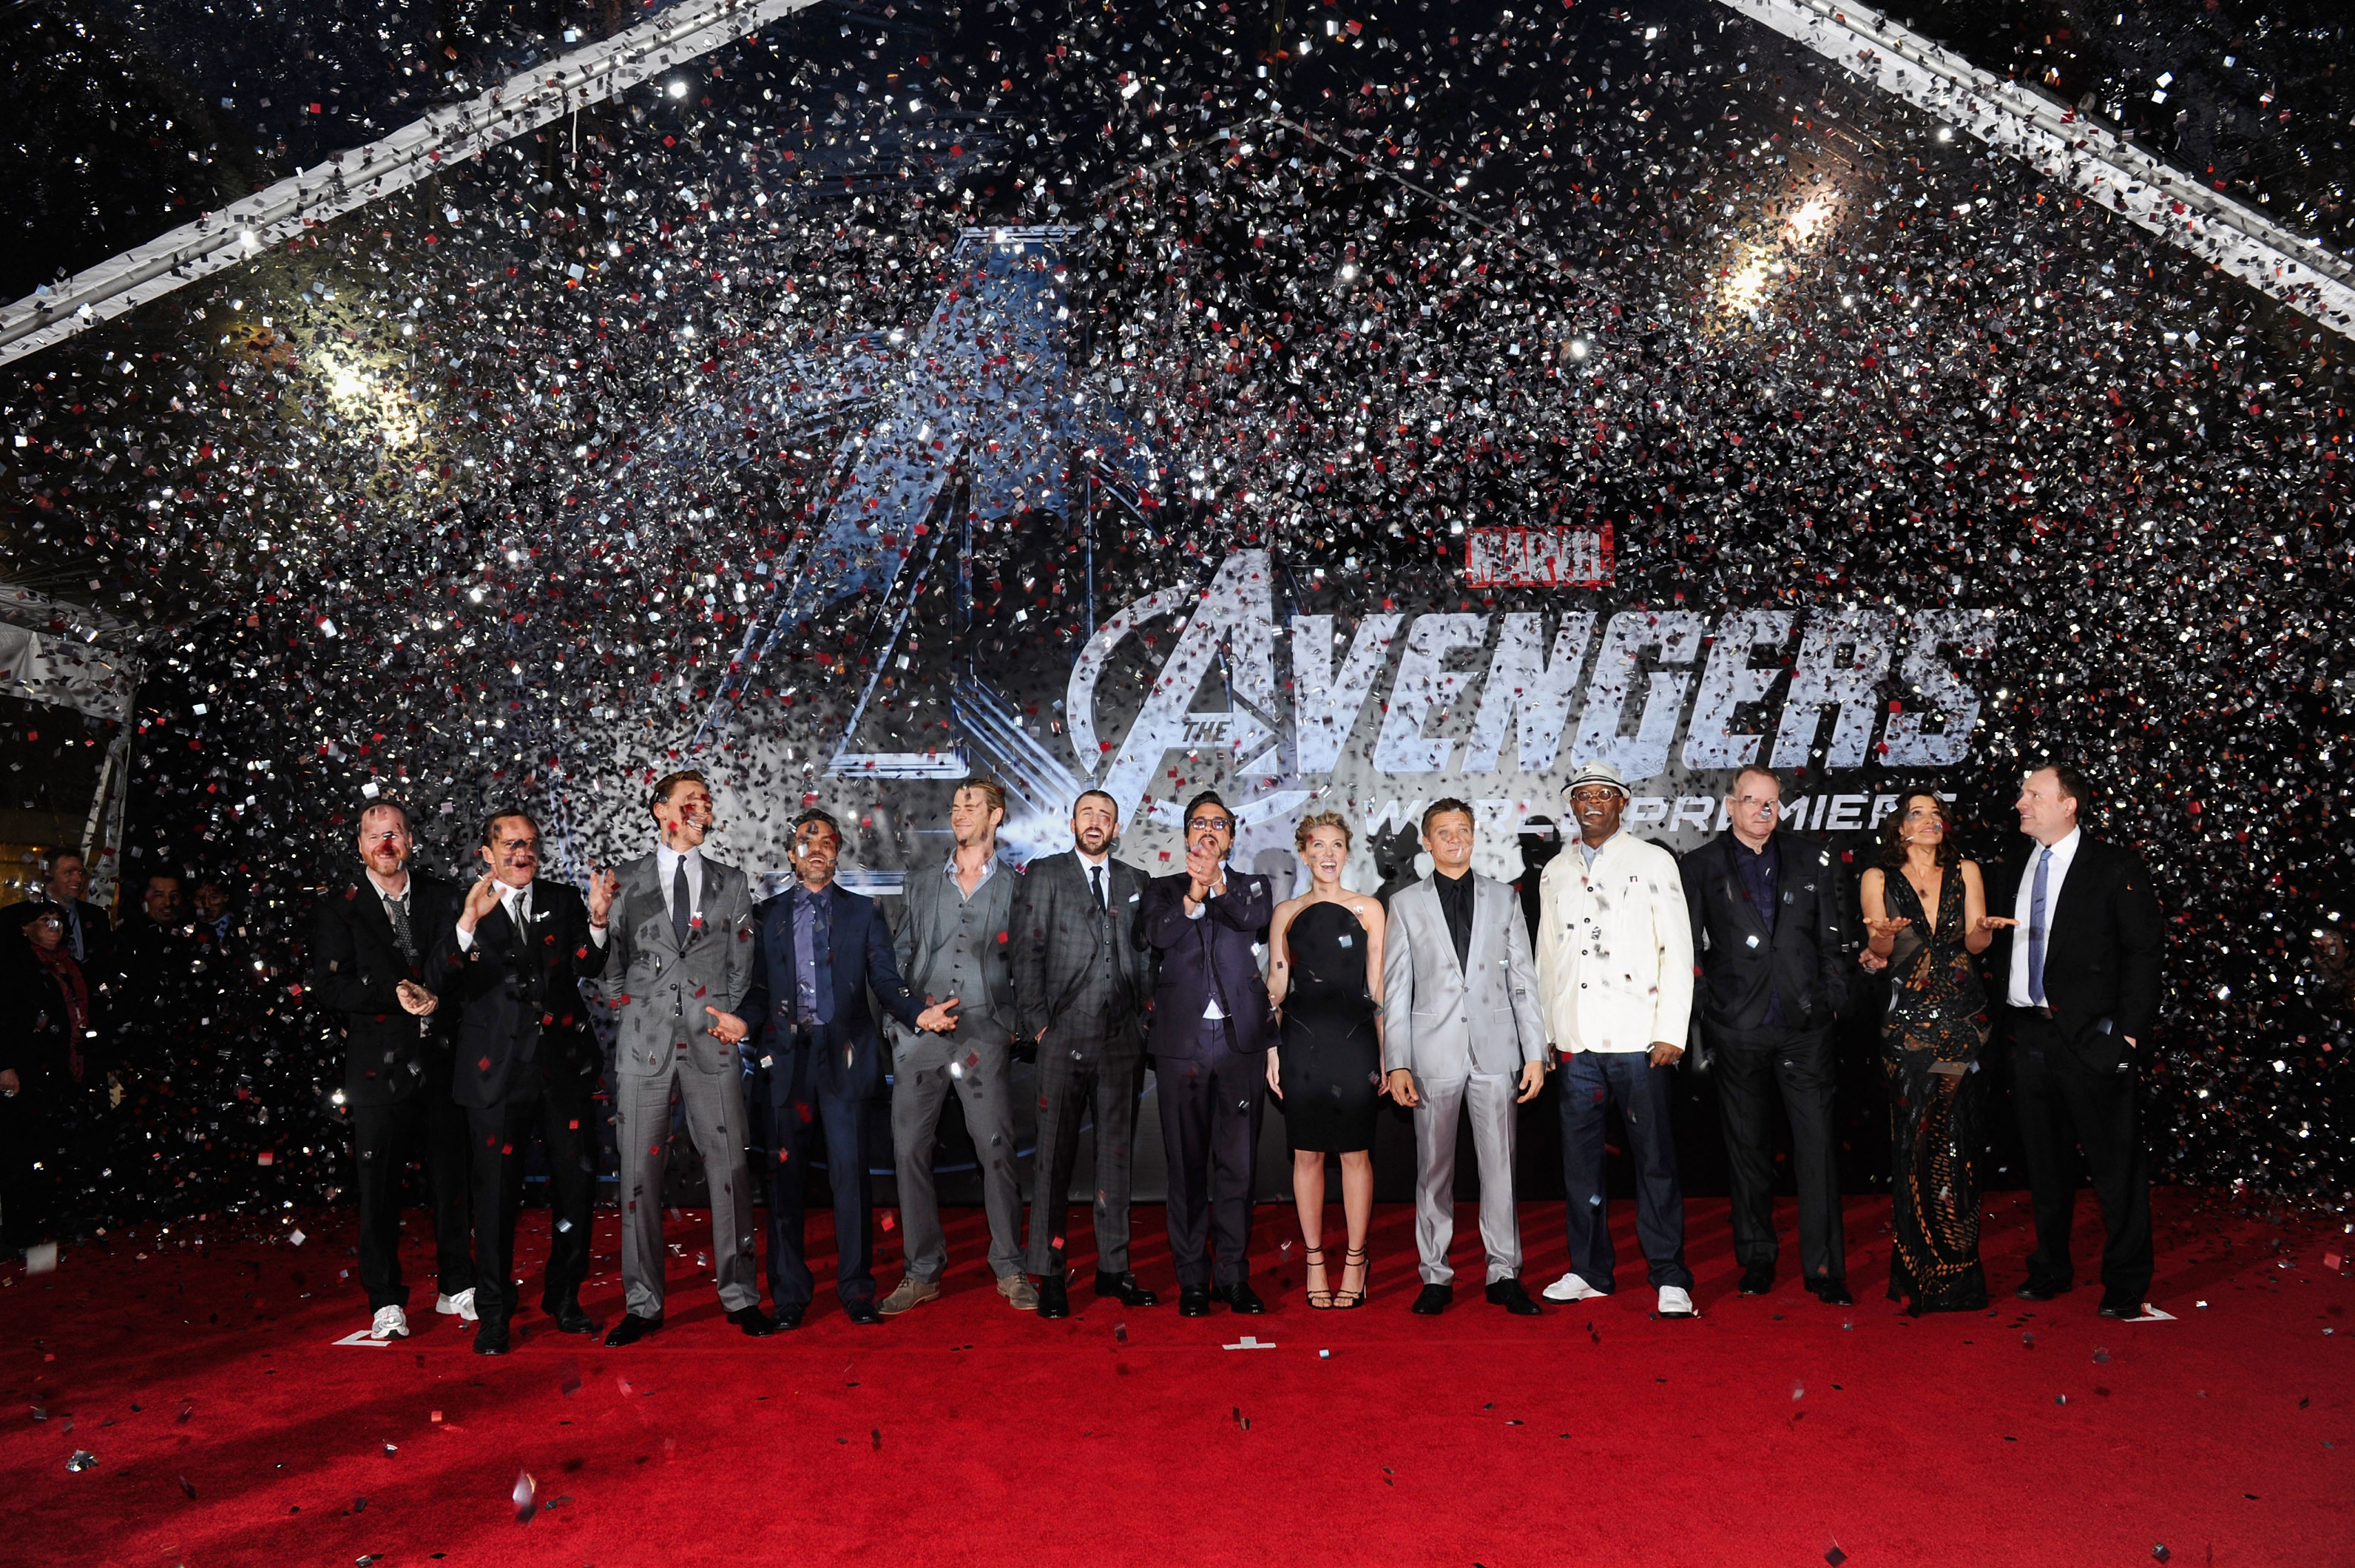 3184x2120 The Avengers' World Premiere Red Carpet Pics, Plus Free Comic Book Day Info | Fandang